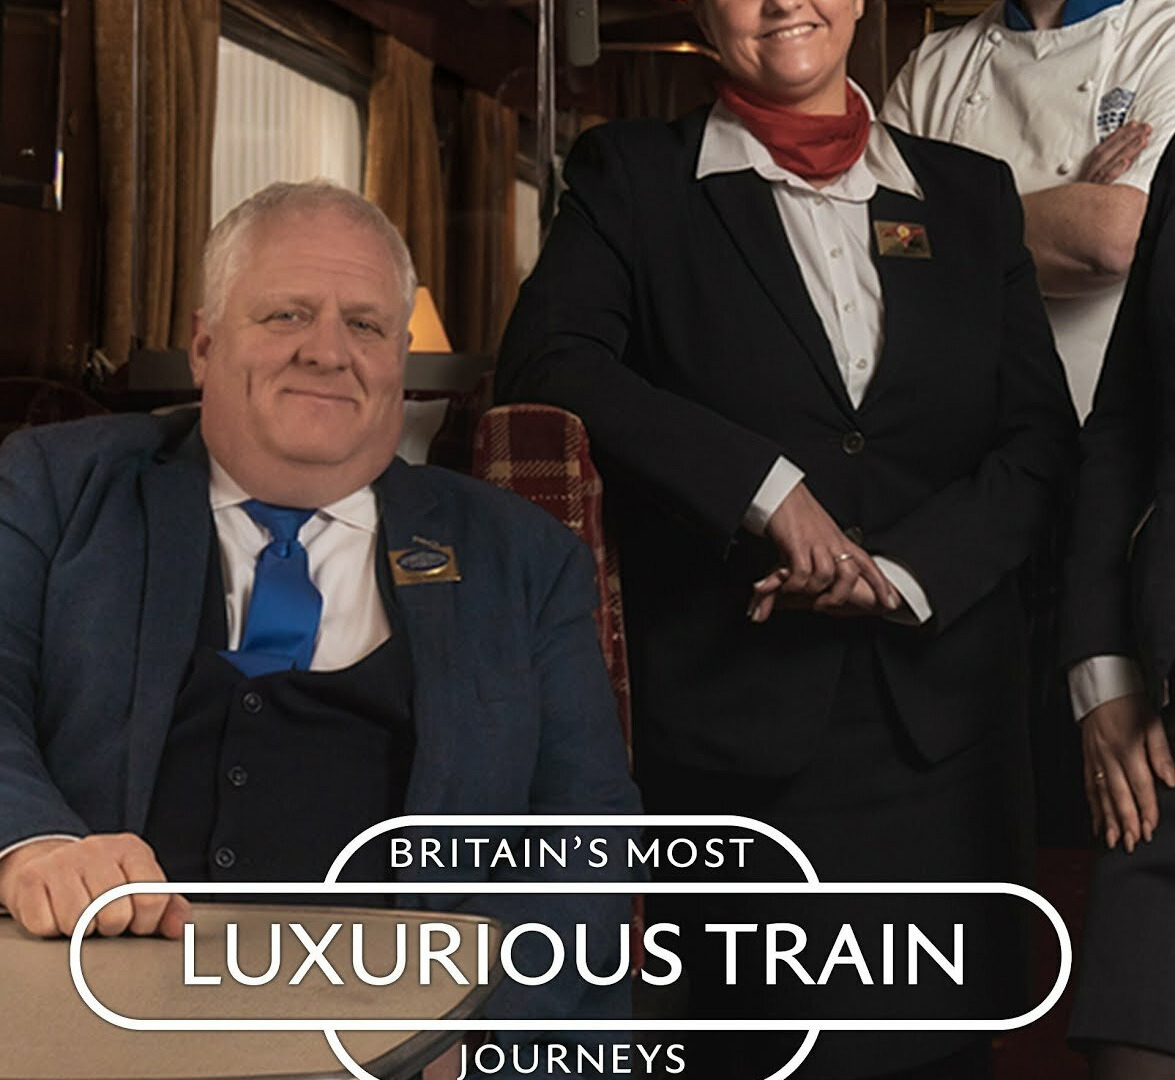 Show Britain's Most Luxurious Train Journeys